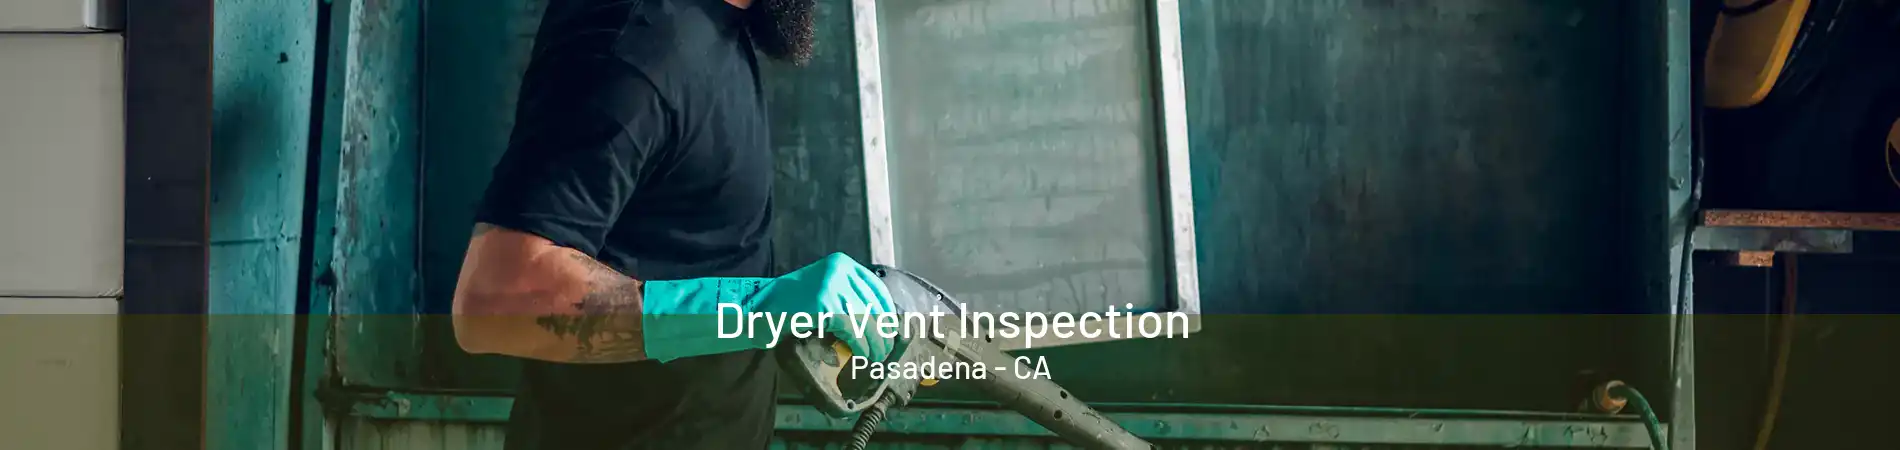 Dryer Vent Inspection Pasadena - CA